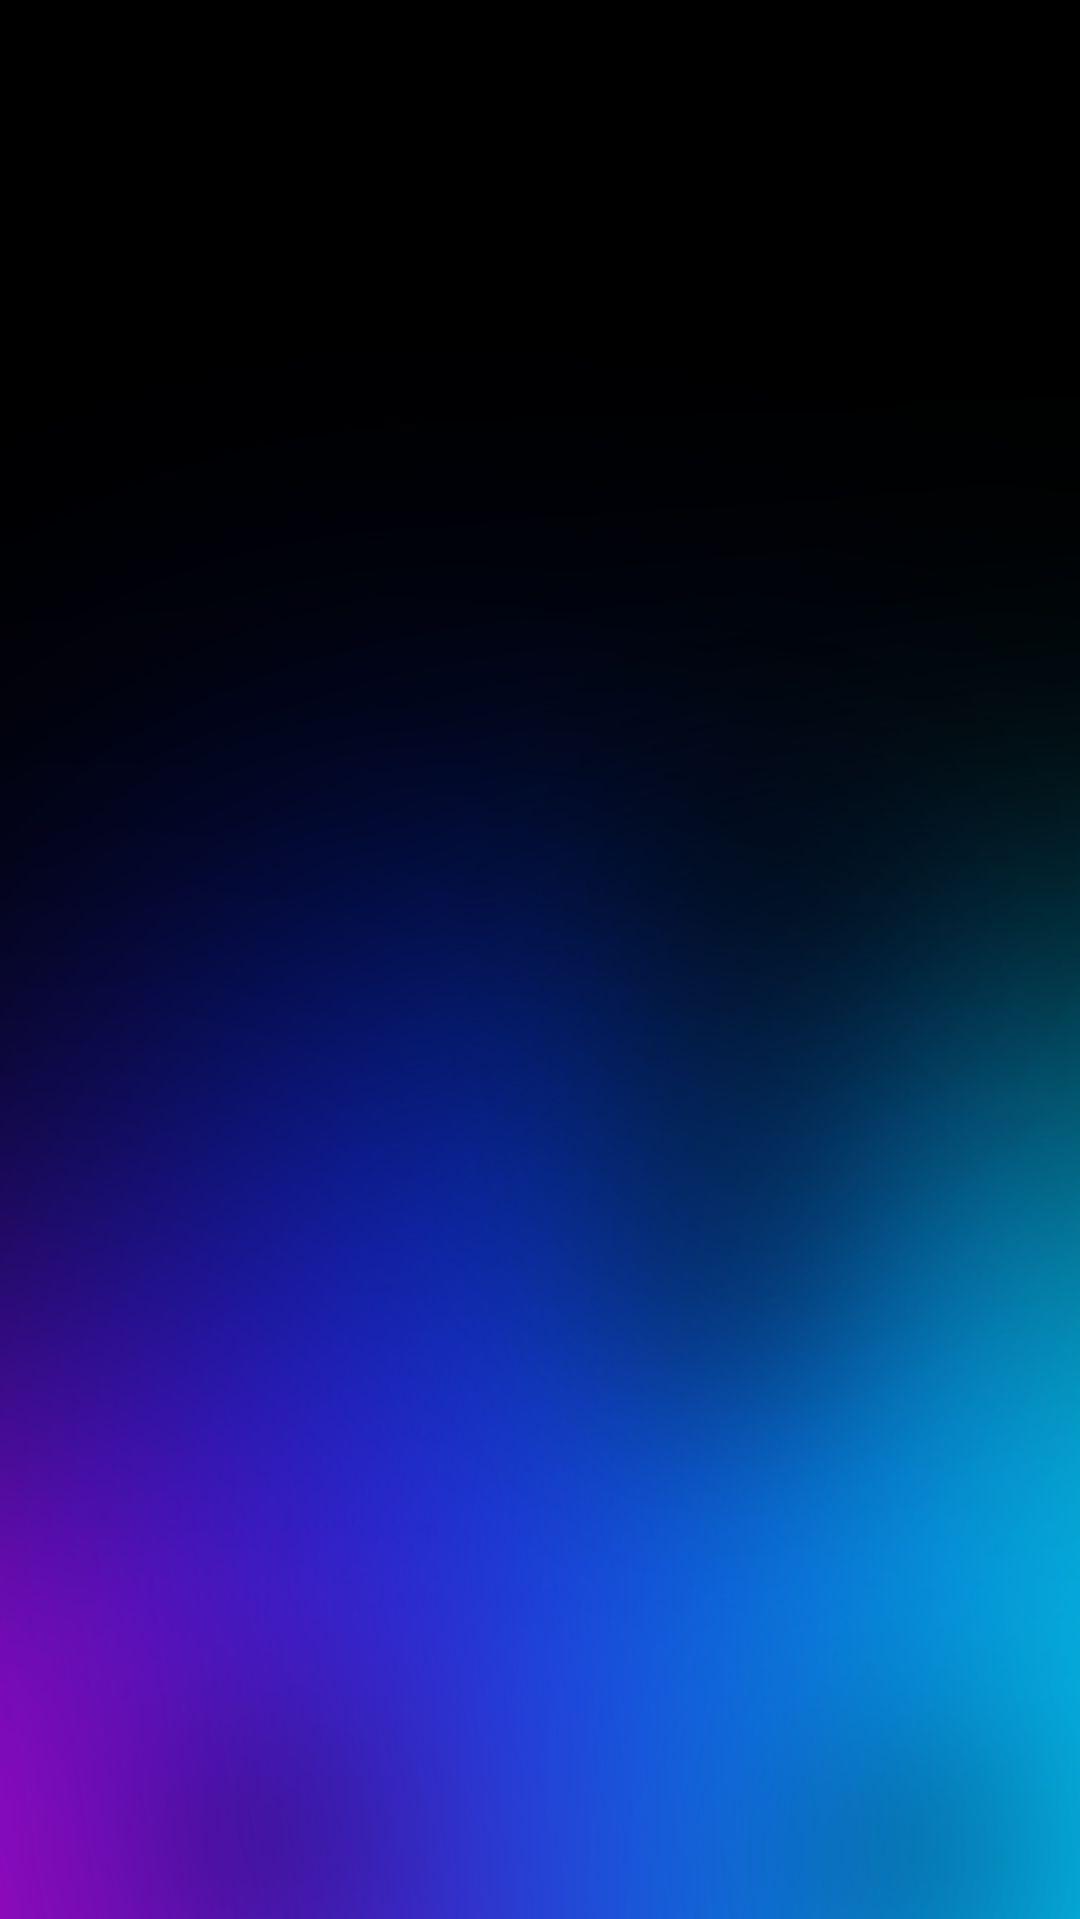 Dark Blue Gradient iPhone Wallpaper